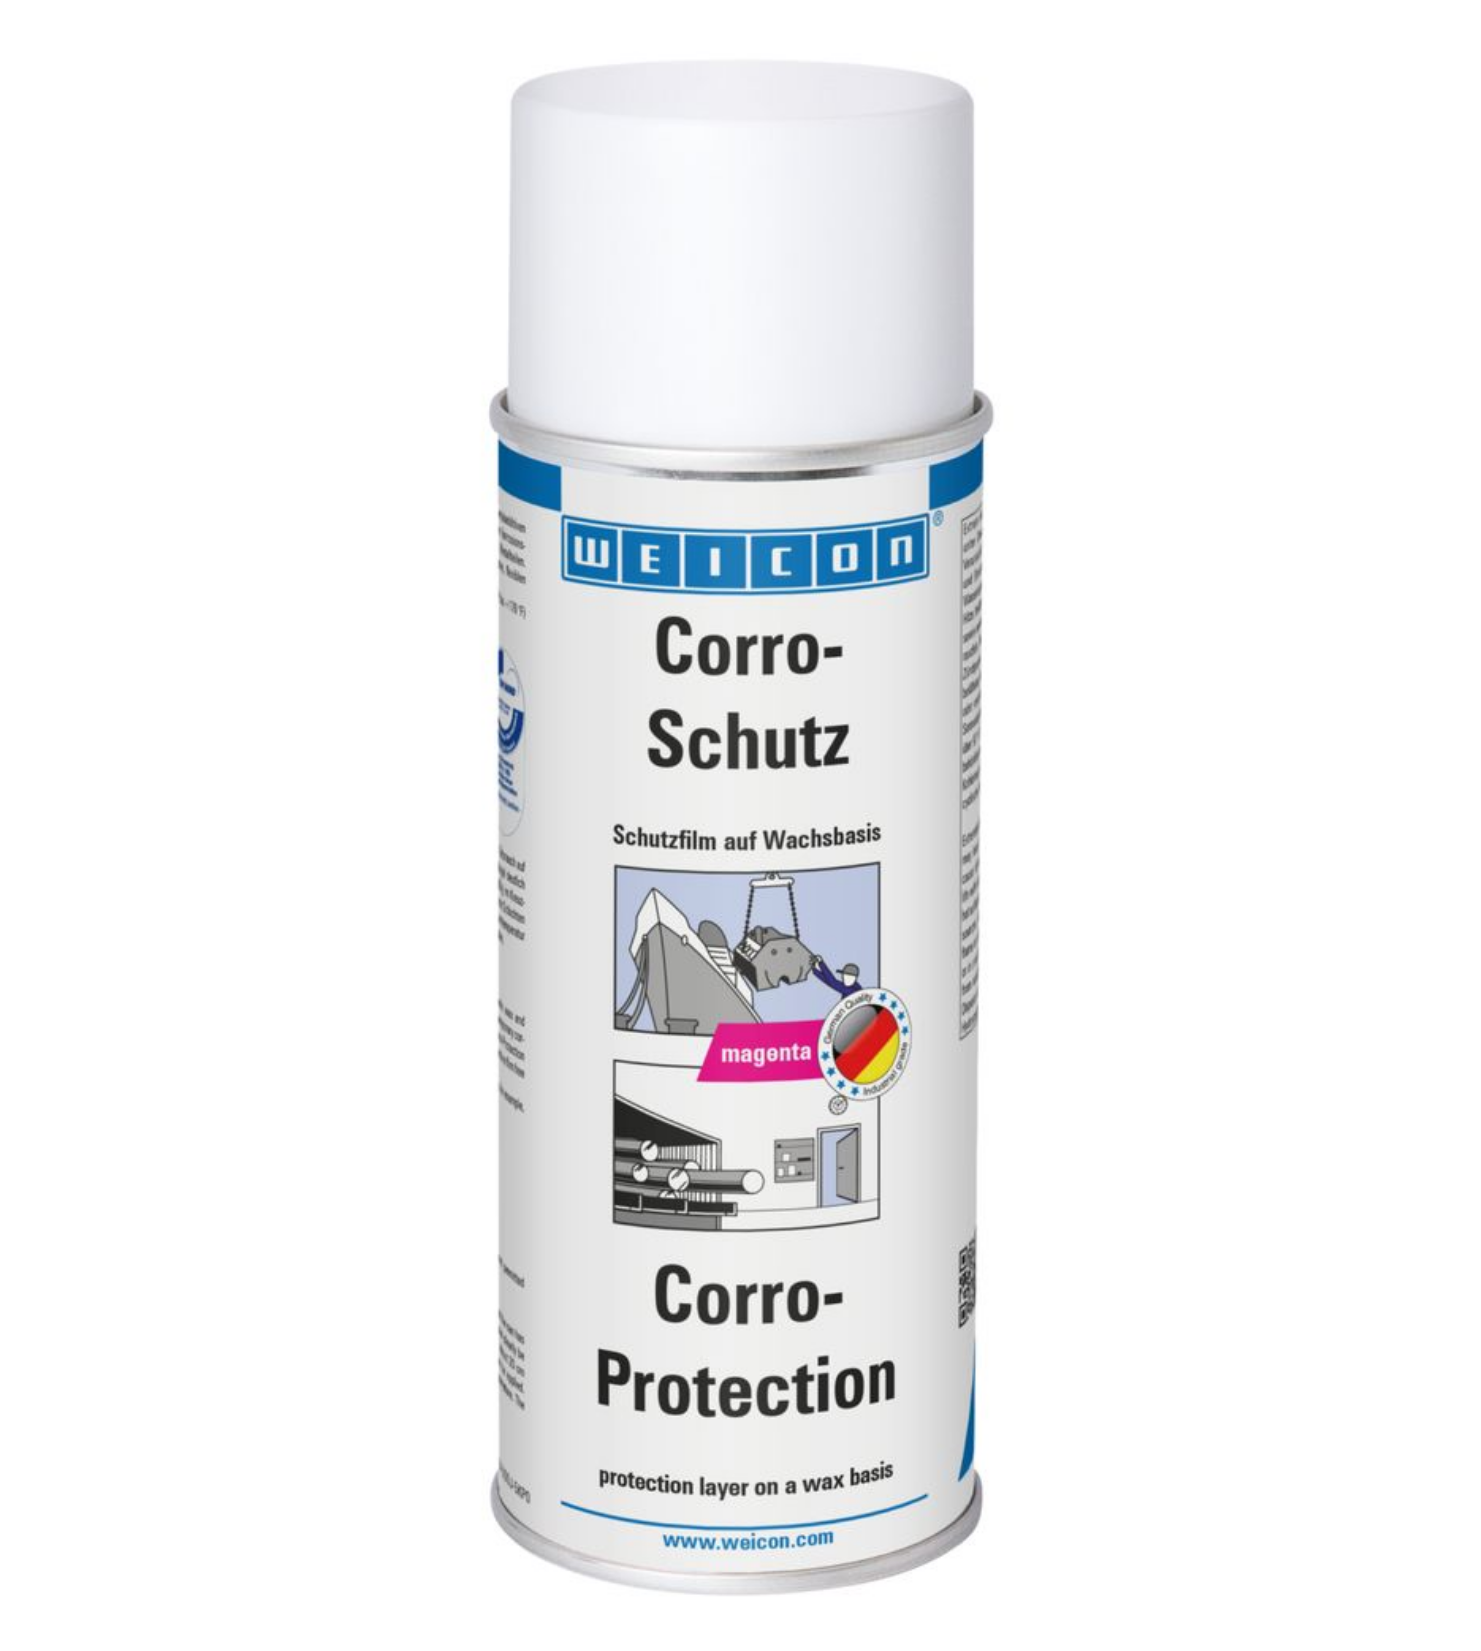 Corro-Protection